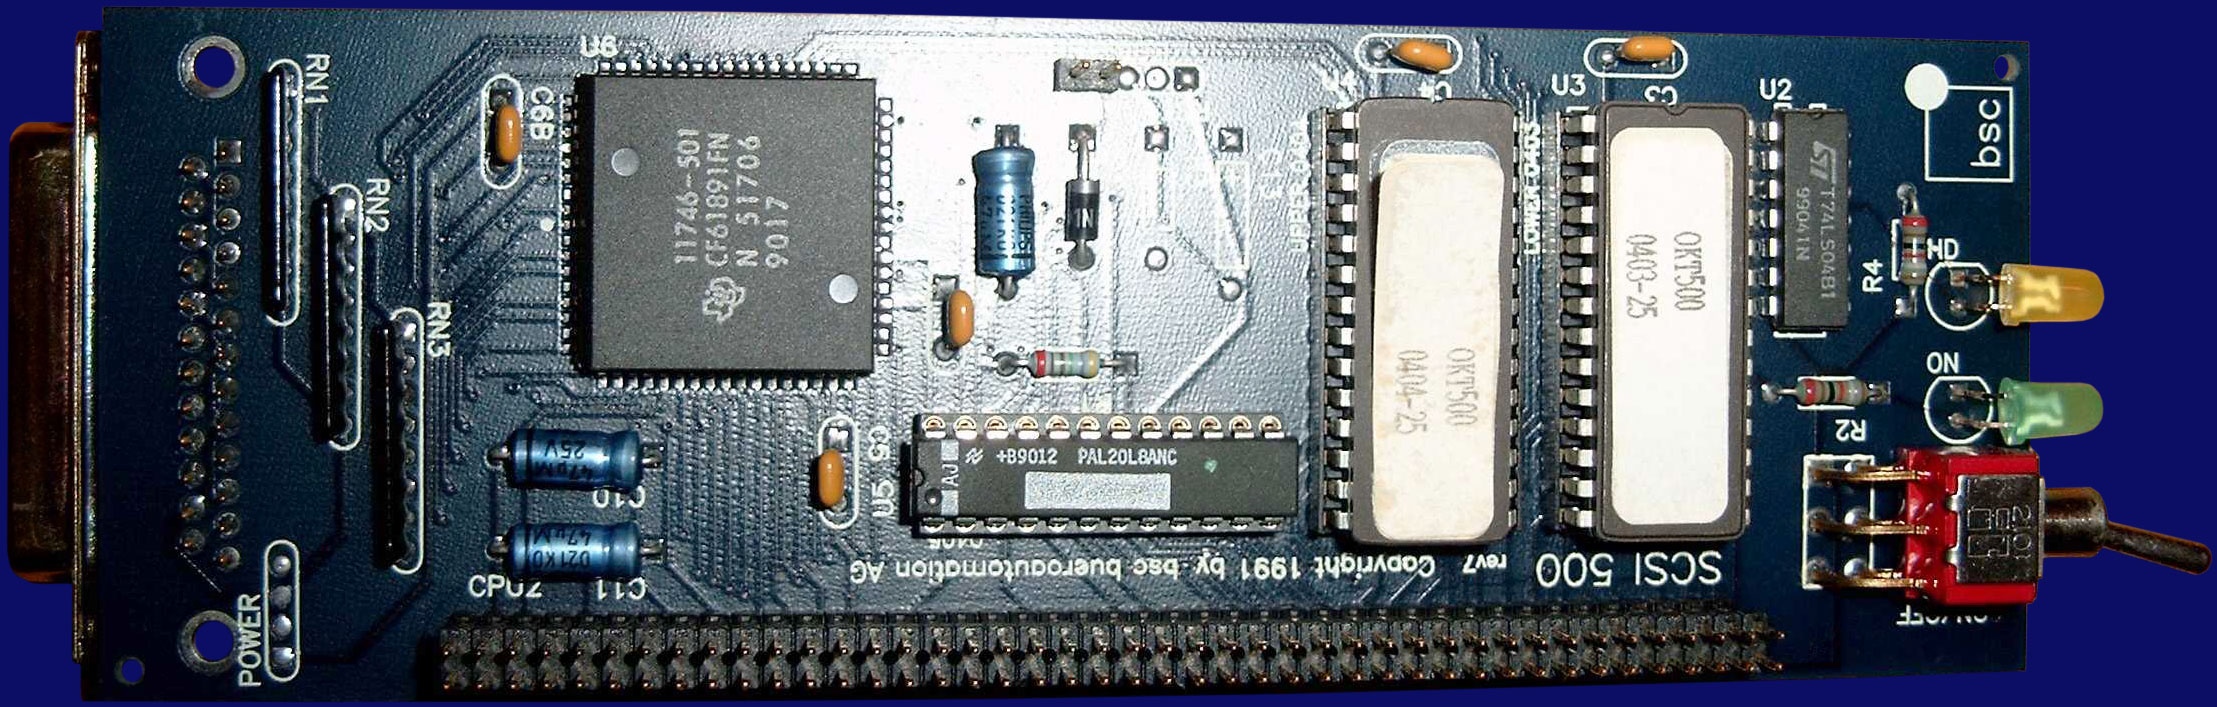 Elaborate Bytes / BSC A.L.F. 2 - BSC A.L.F. 2 SCSI 500 controller card, front side